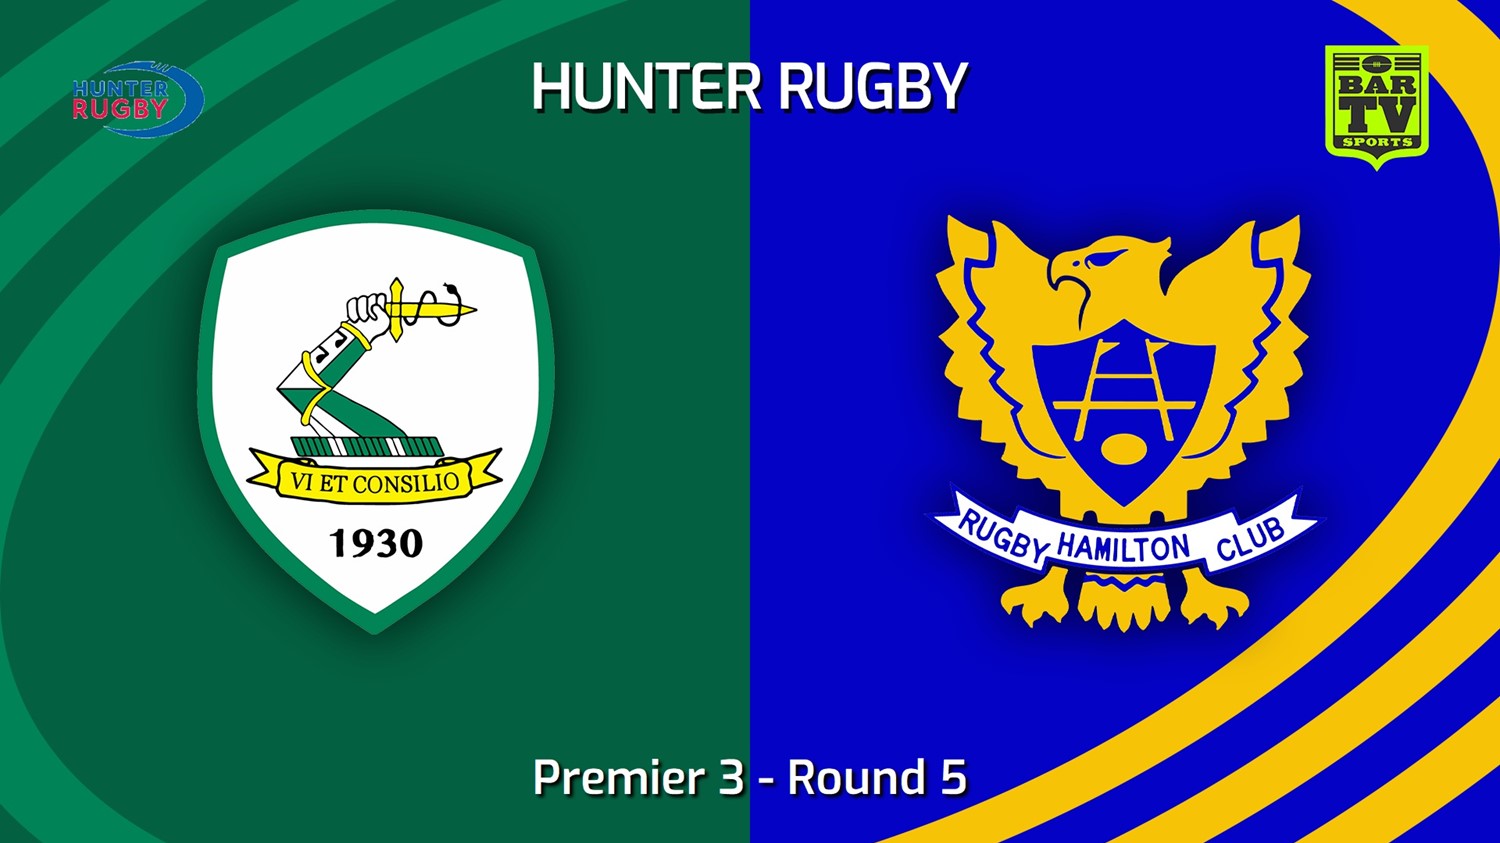 230513-Hunter Rugby Round 5 - Premier 3 - Merewether Carlton v Hamilton Hawks Minigame Slate Image